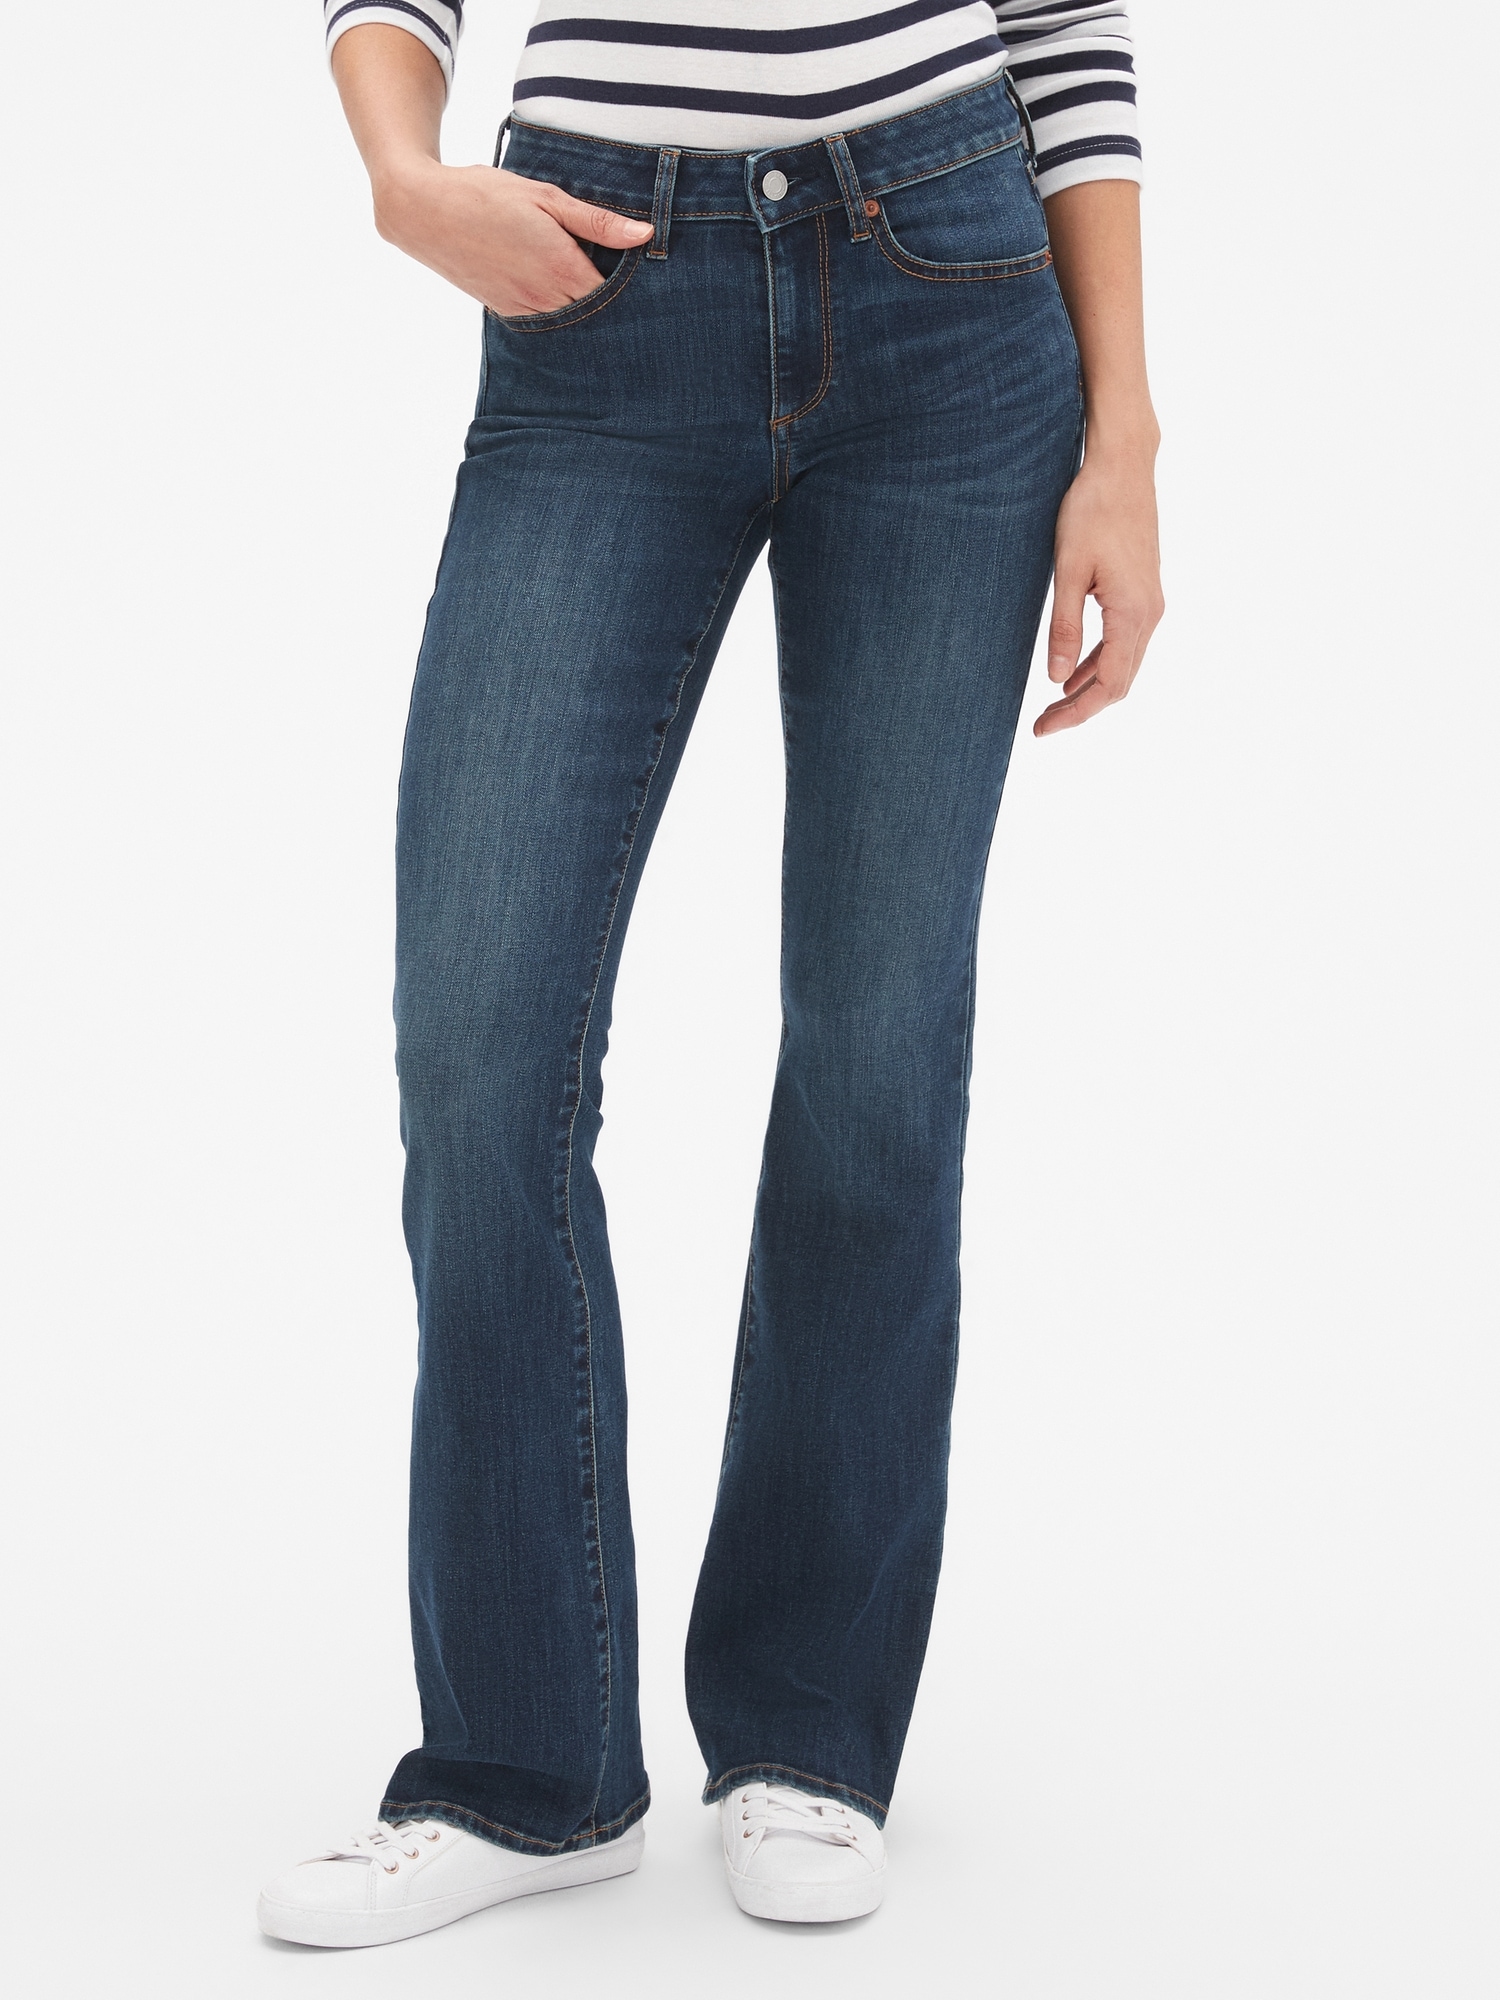 gap curvy bootcut jeans